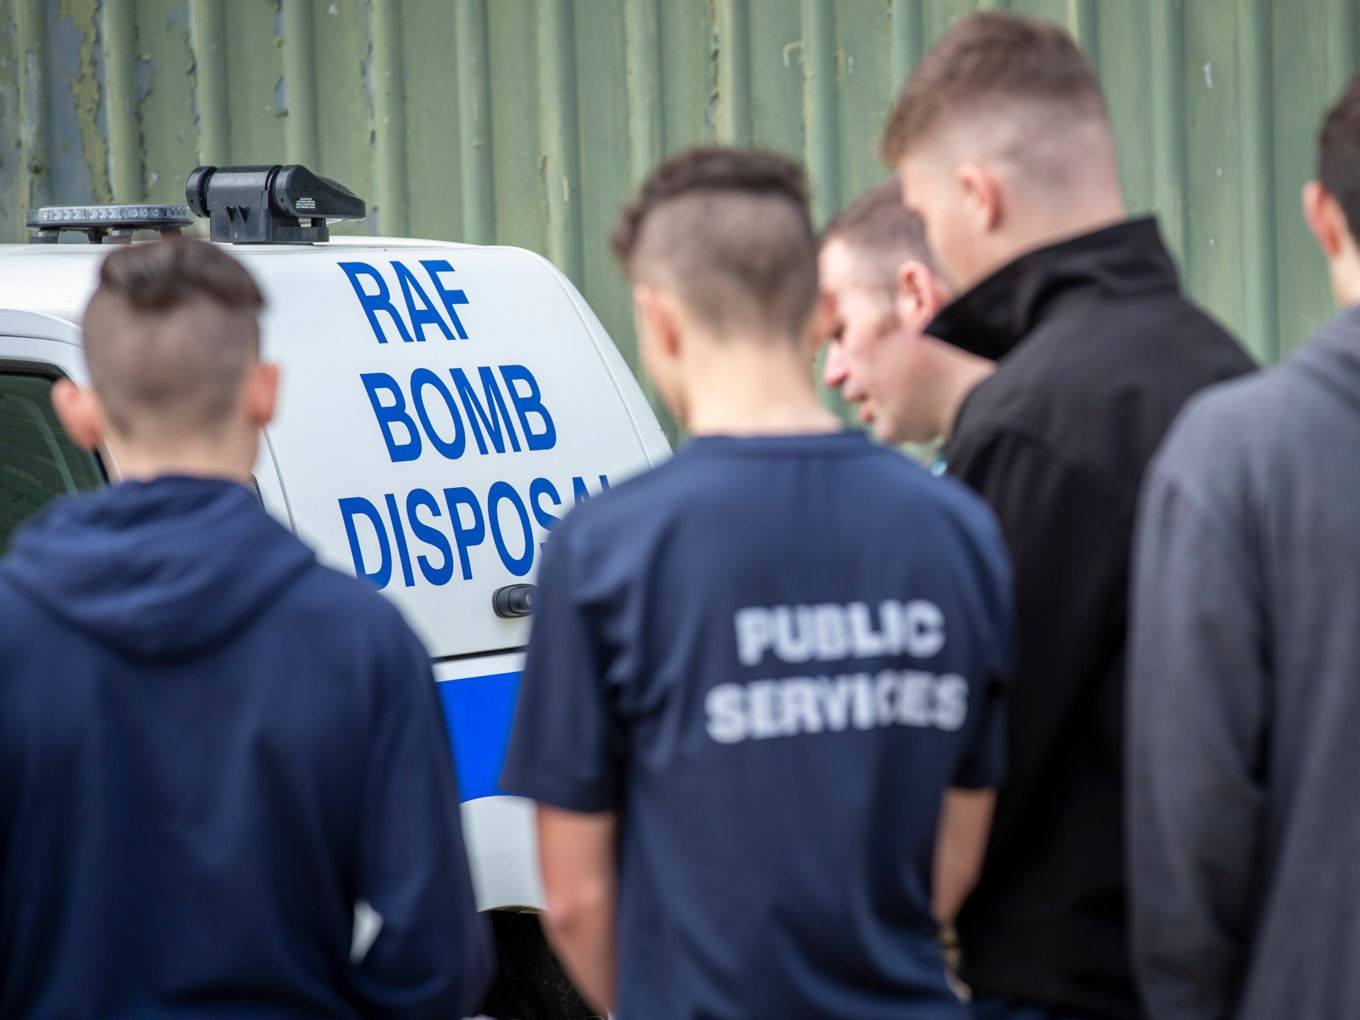 The students meet 5131 Bomb Disposal Squadron